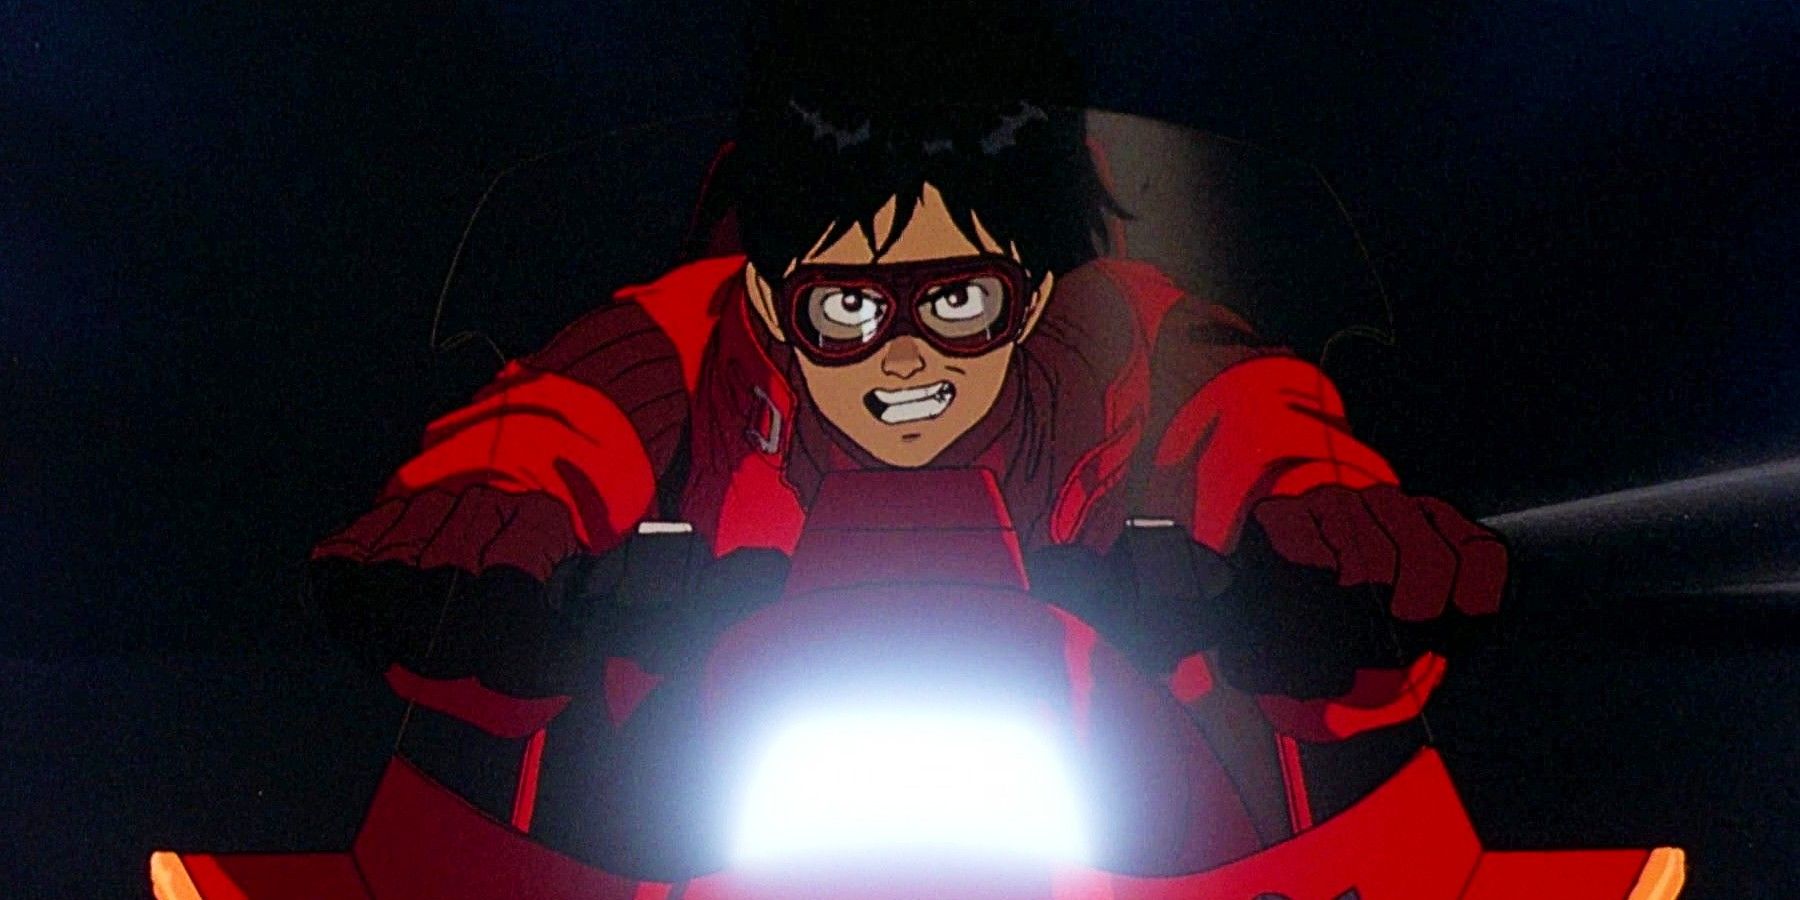 Akira character on a bike